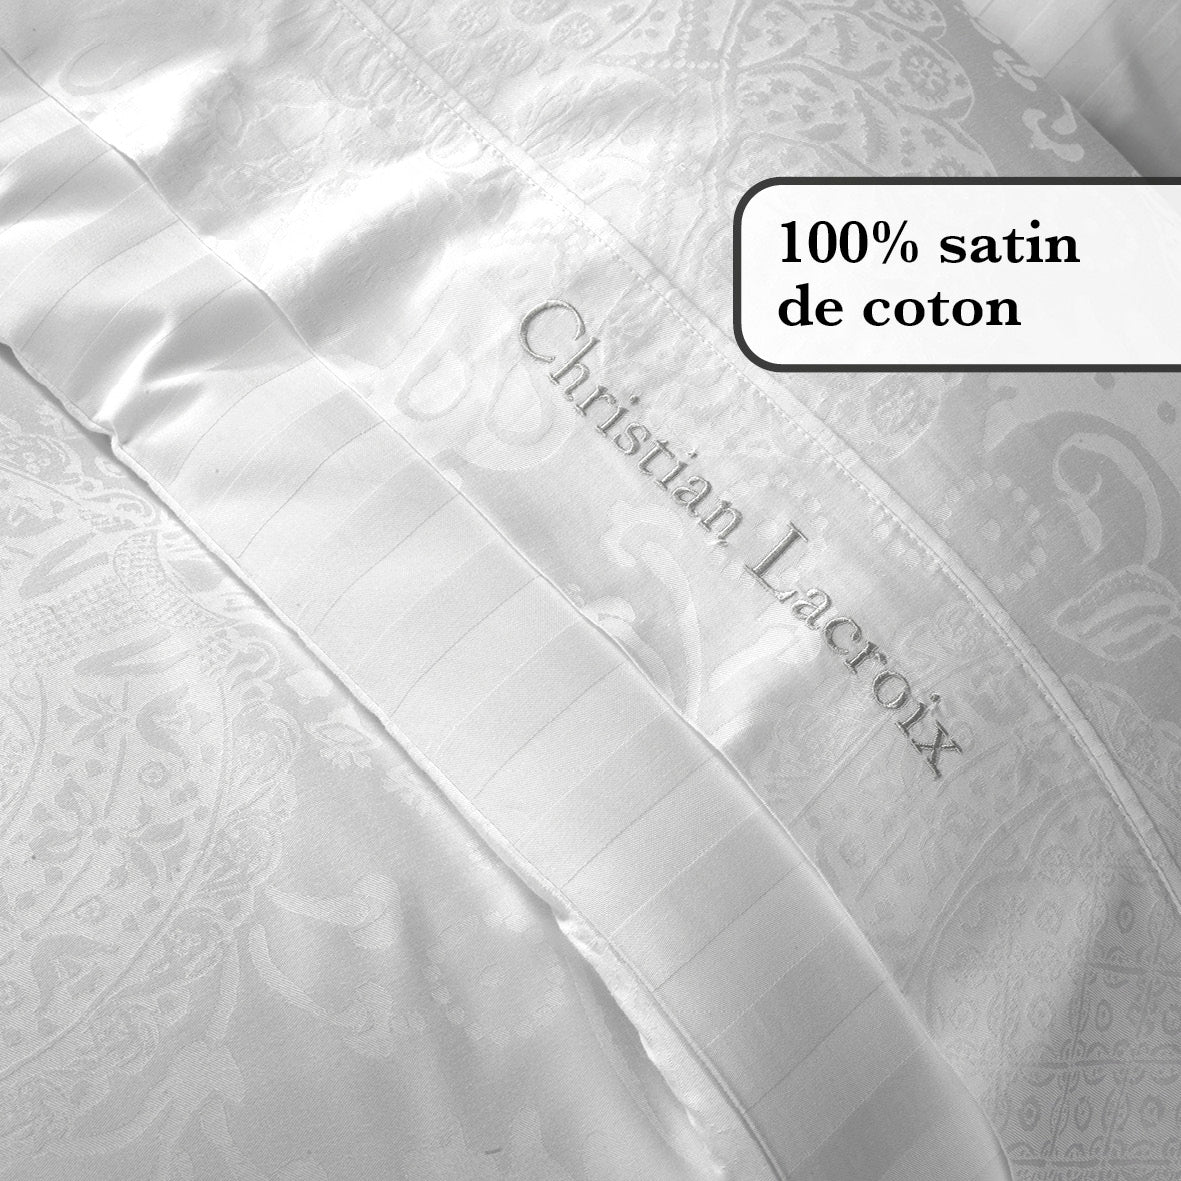 Flat sheet baby cotton satin Jacquard woven Arles White - 80 x 110 cm